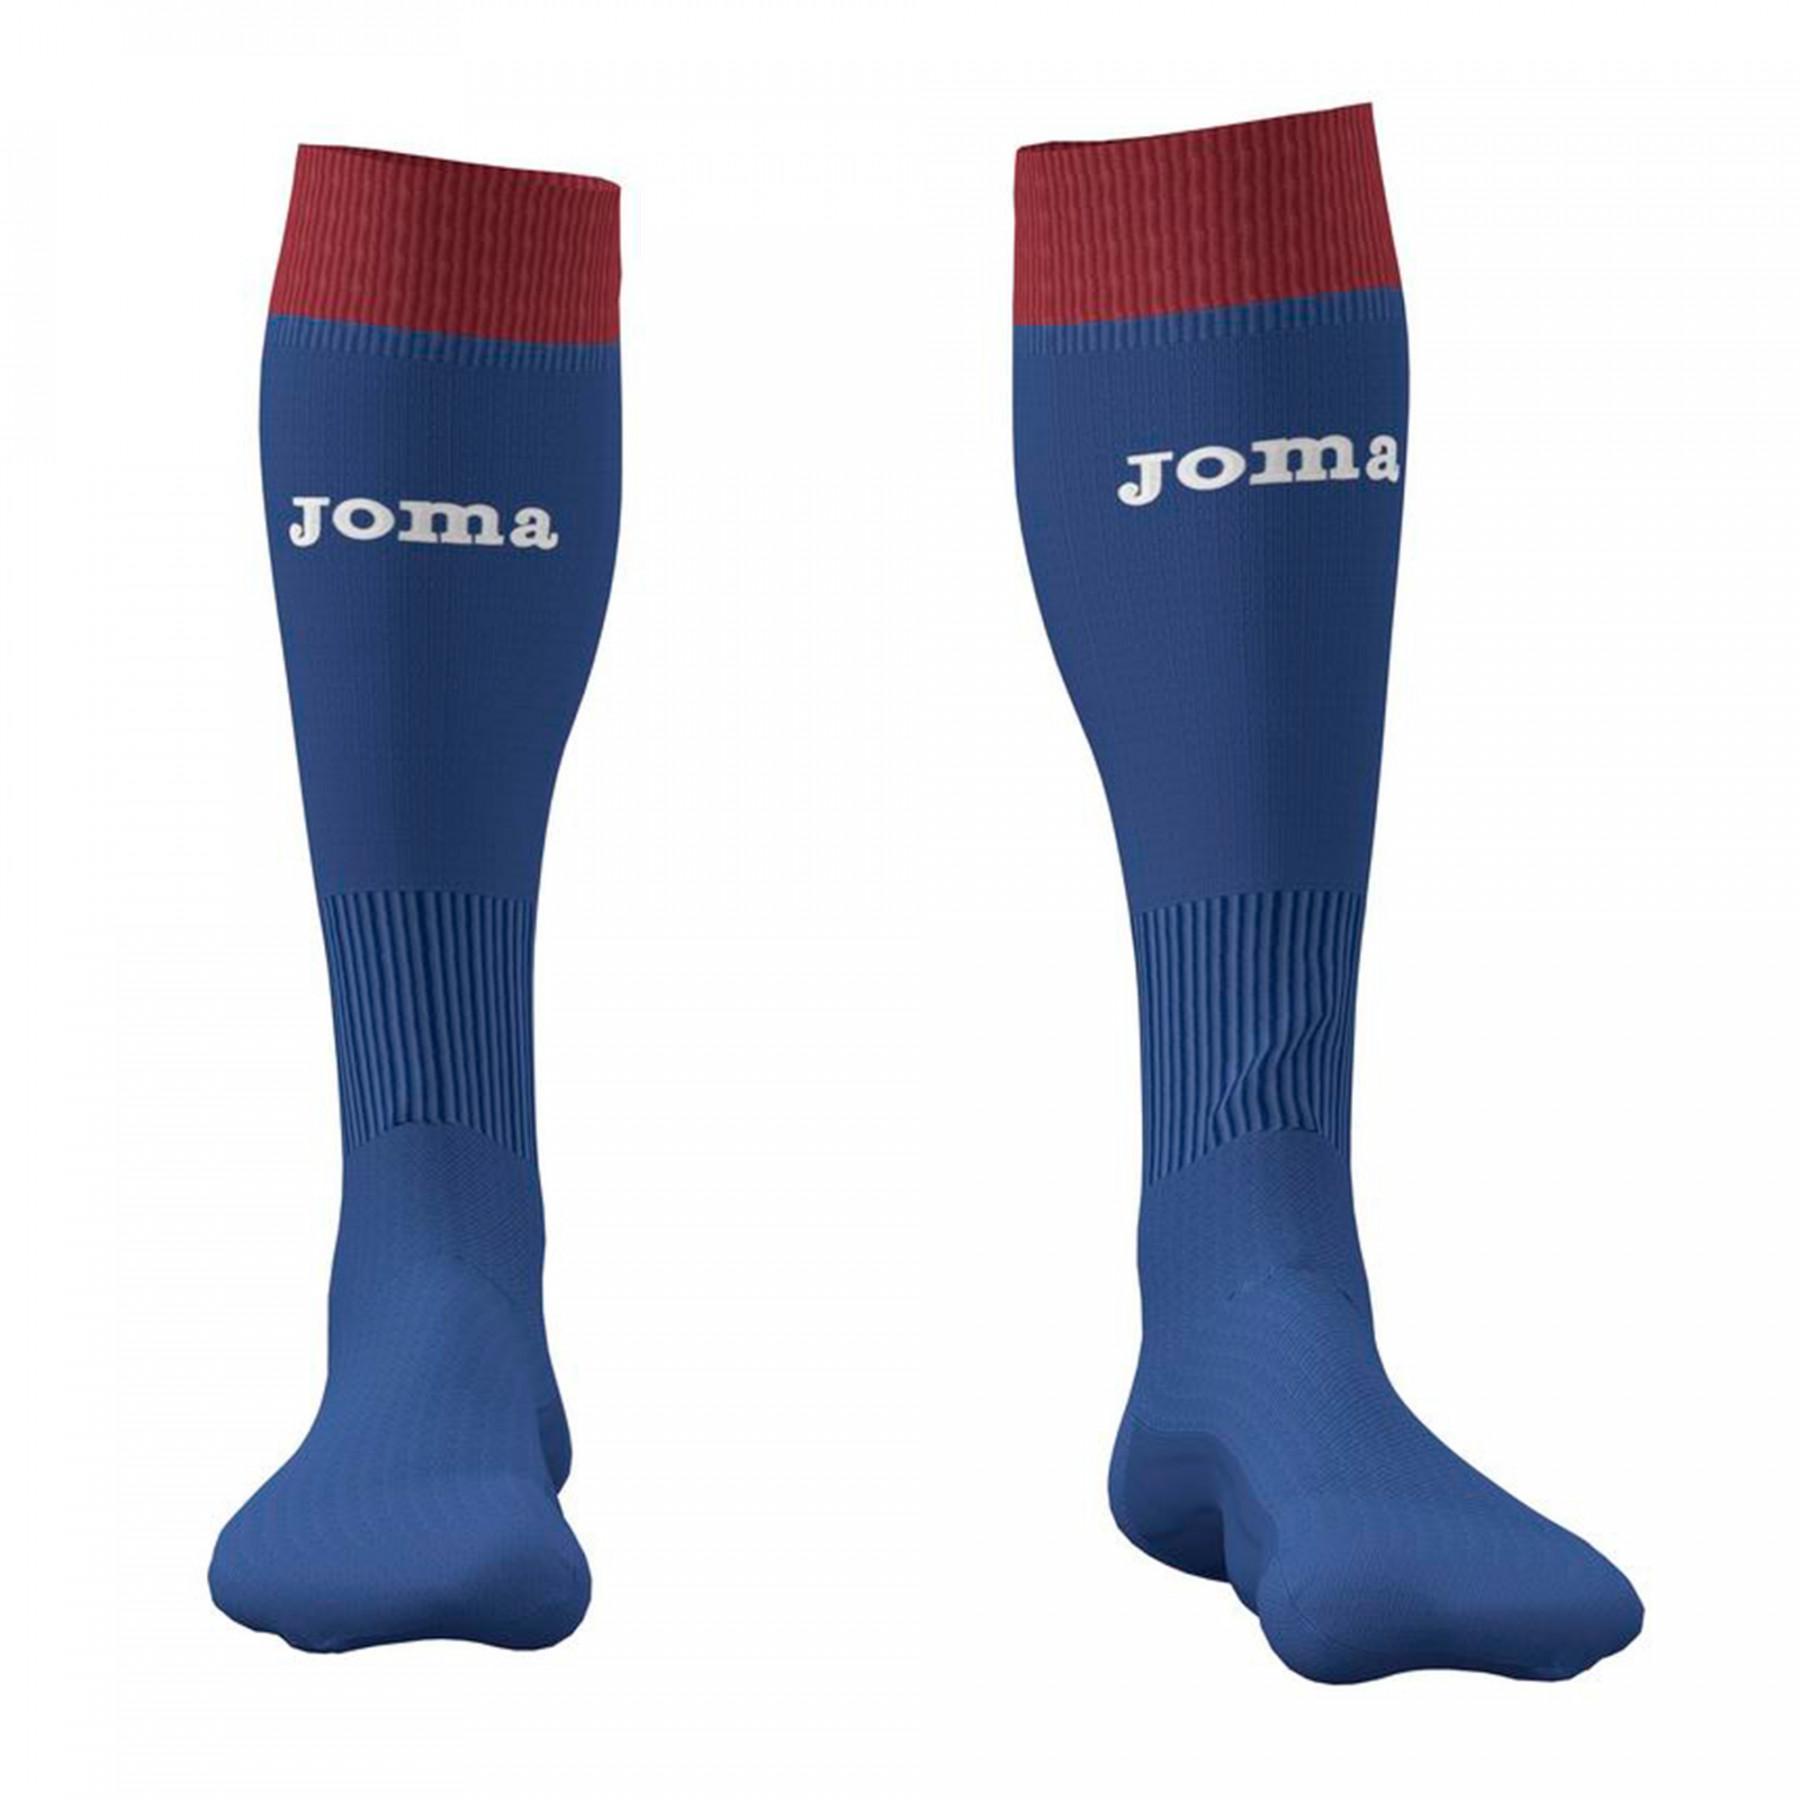 Derde sokken Torino 2019/20